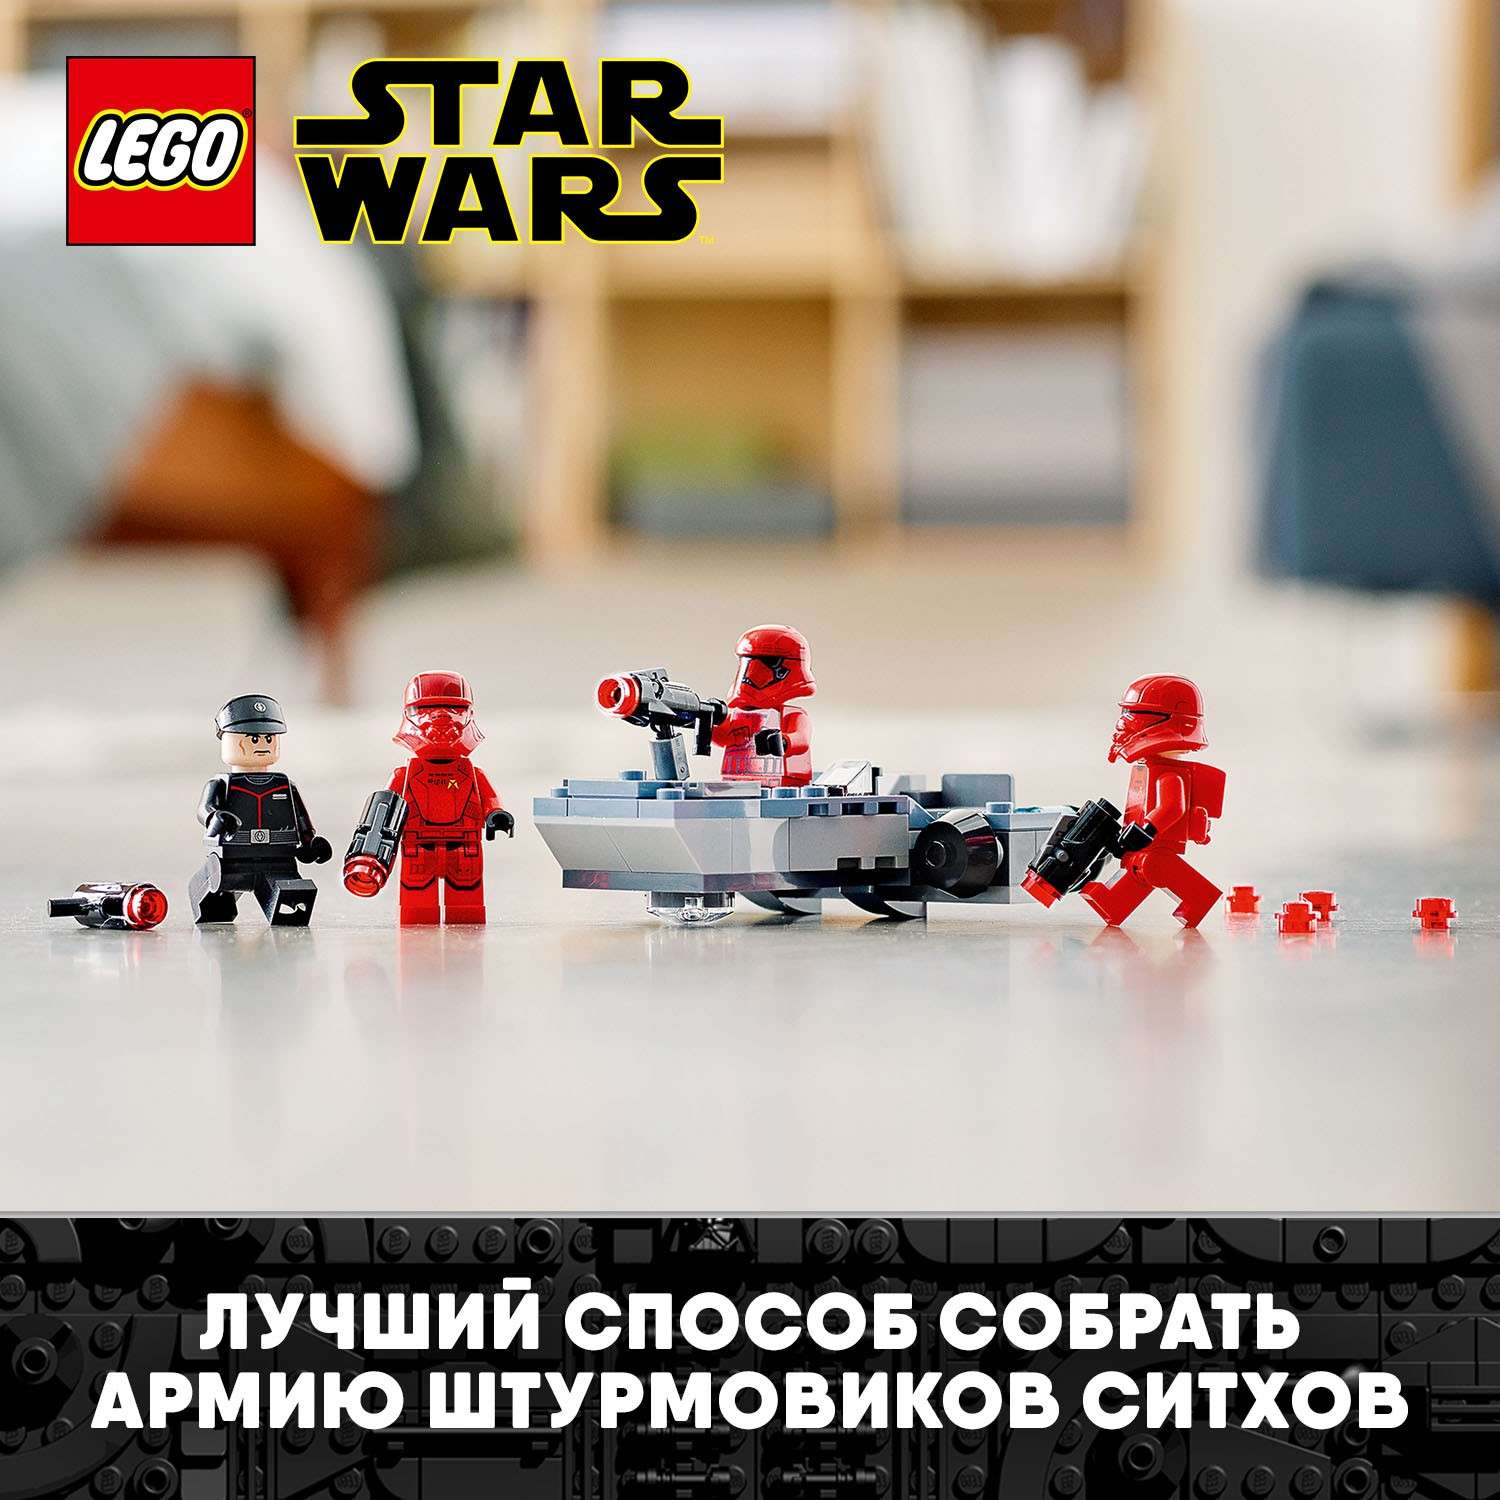 Конструктор LEGO Star Wars Боевой набор Штурмовики ситхов 75266 - фото 4